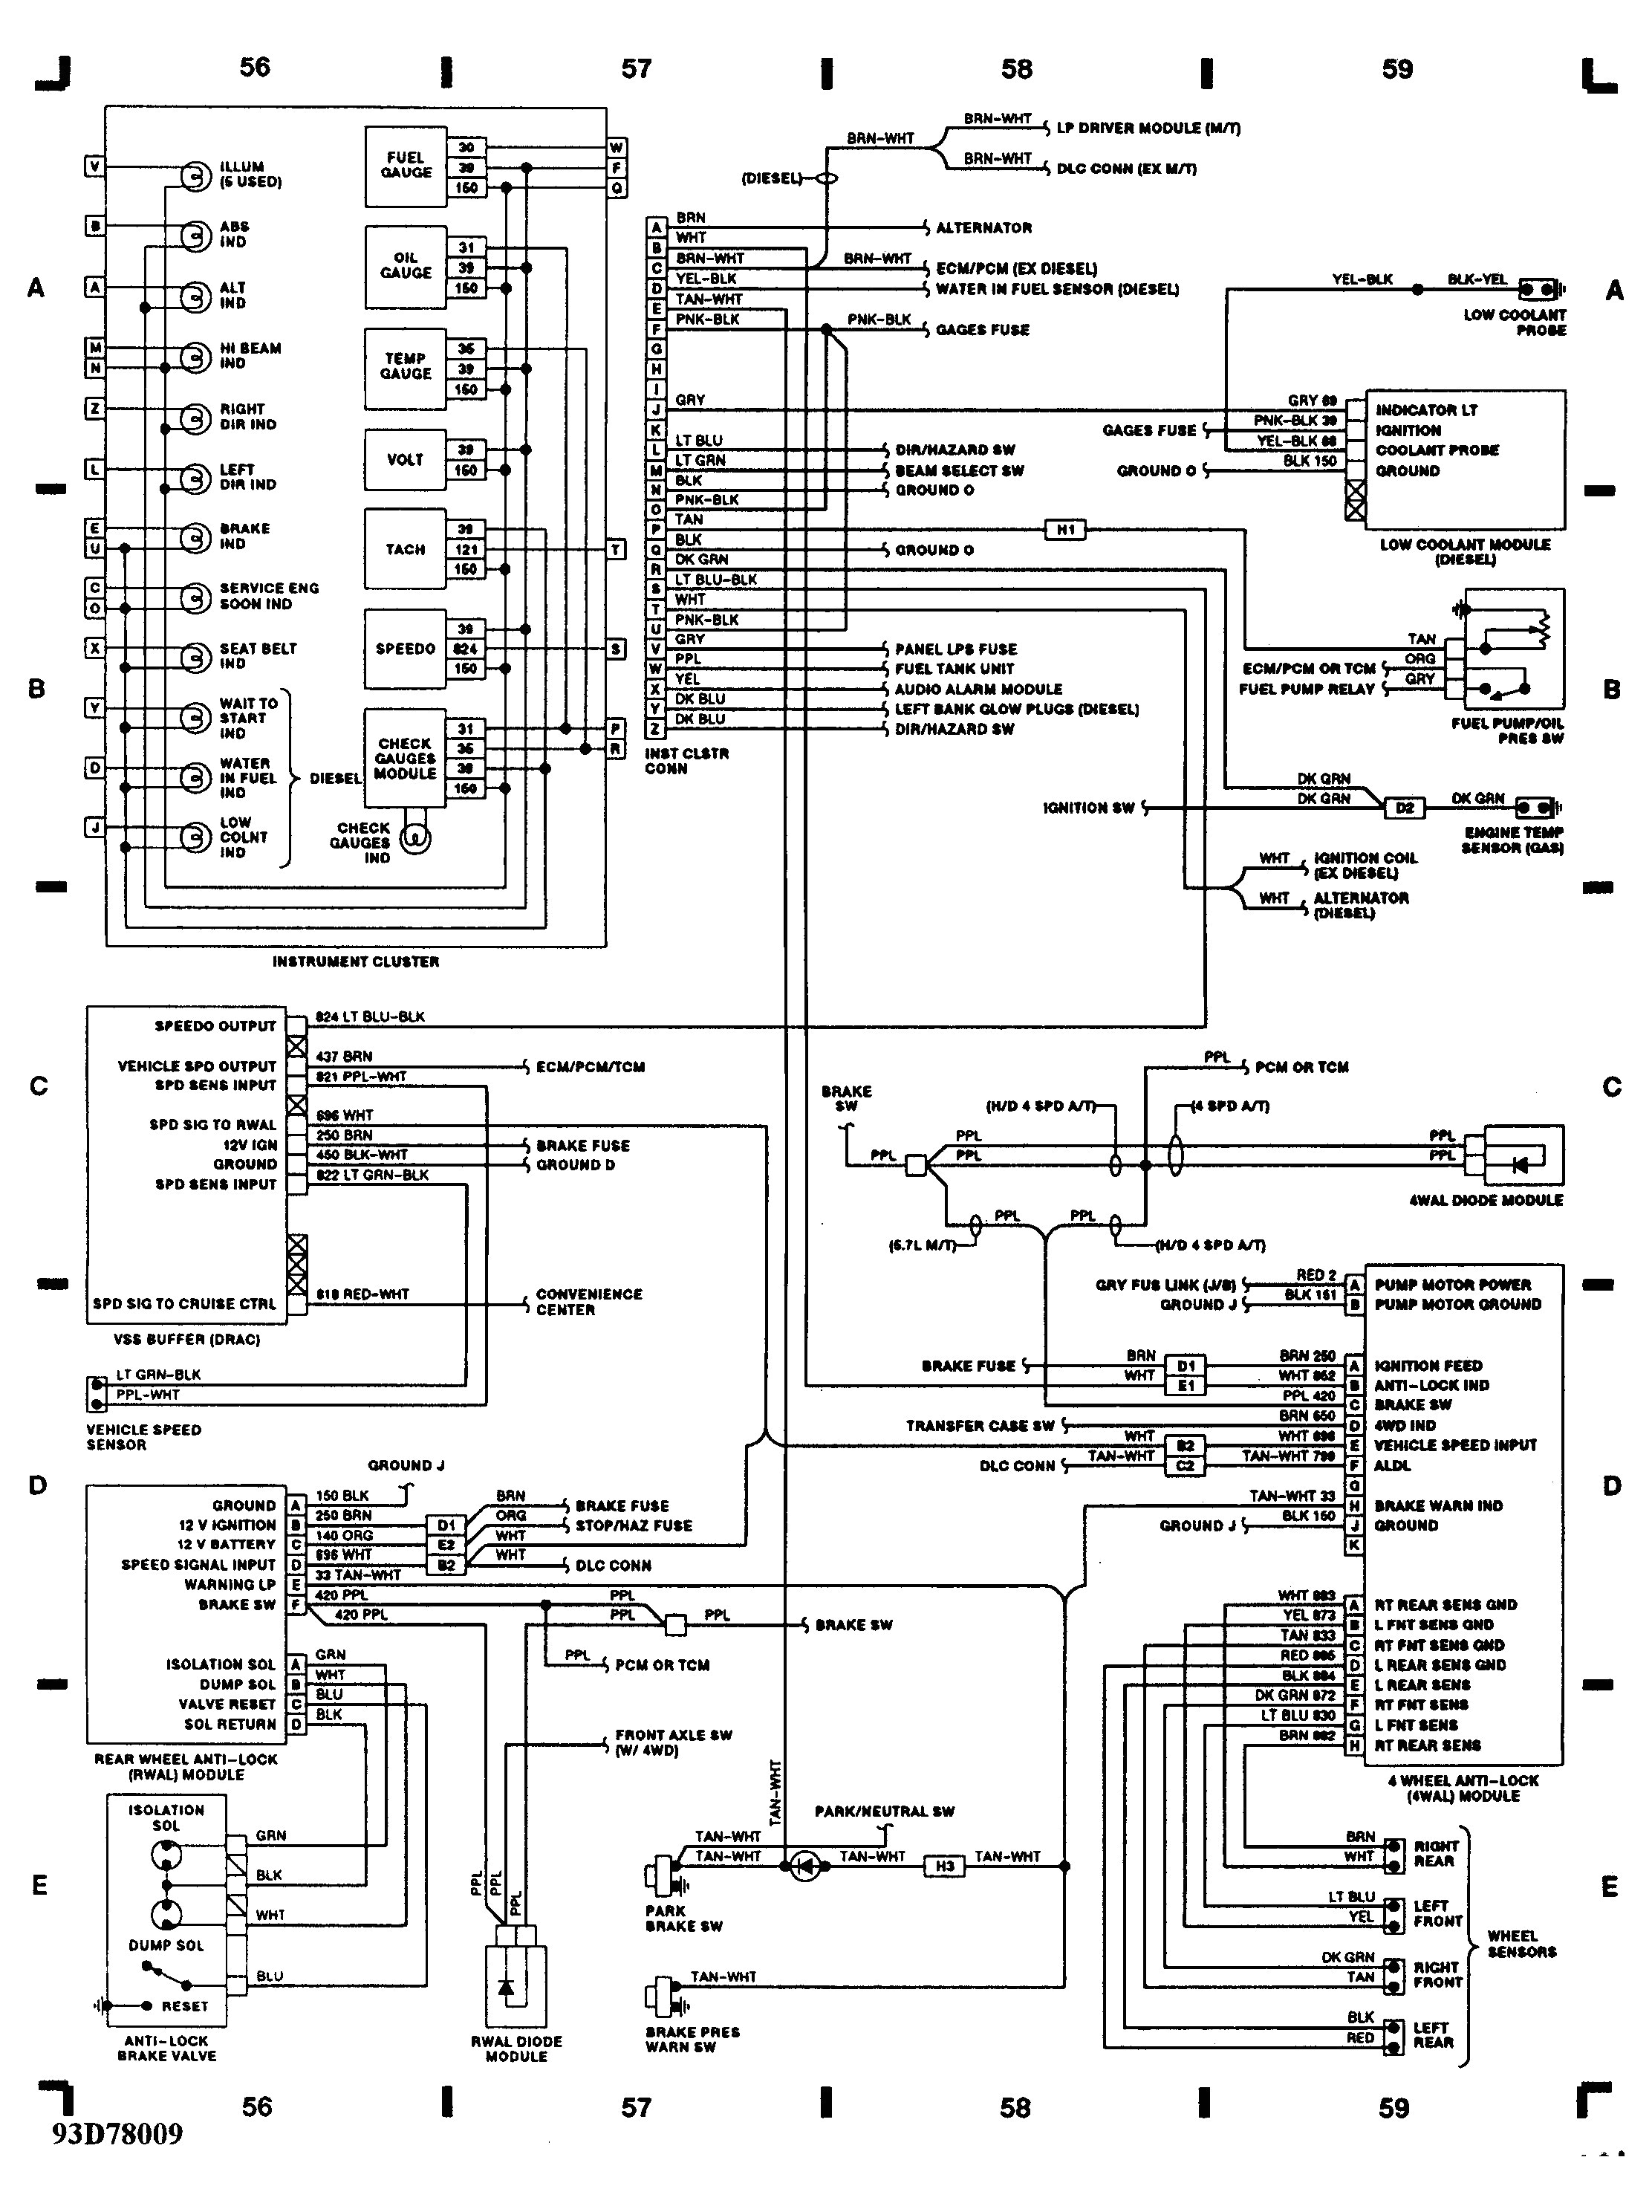 chevy silverado transmission diagram schema wiring diagram wiring diagram 2005 chevy silverado cluster wiring diagram 2005 chevy silverado